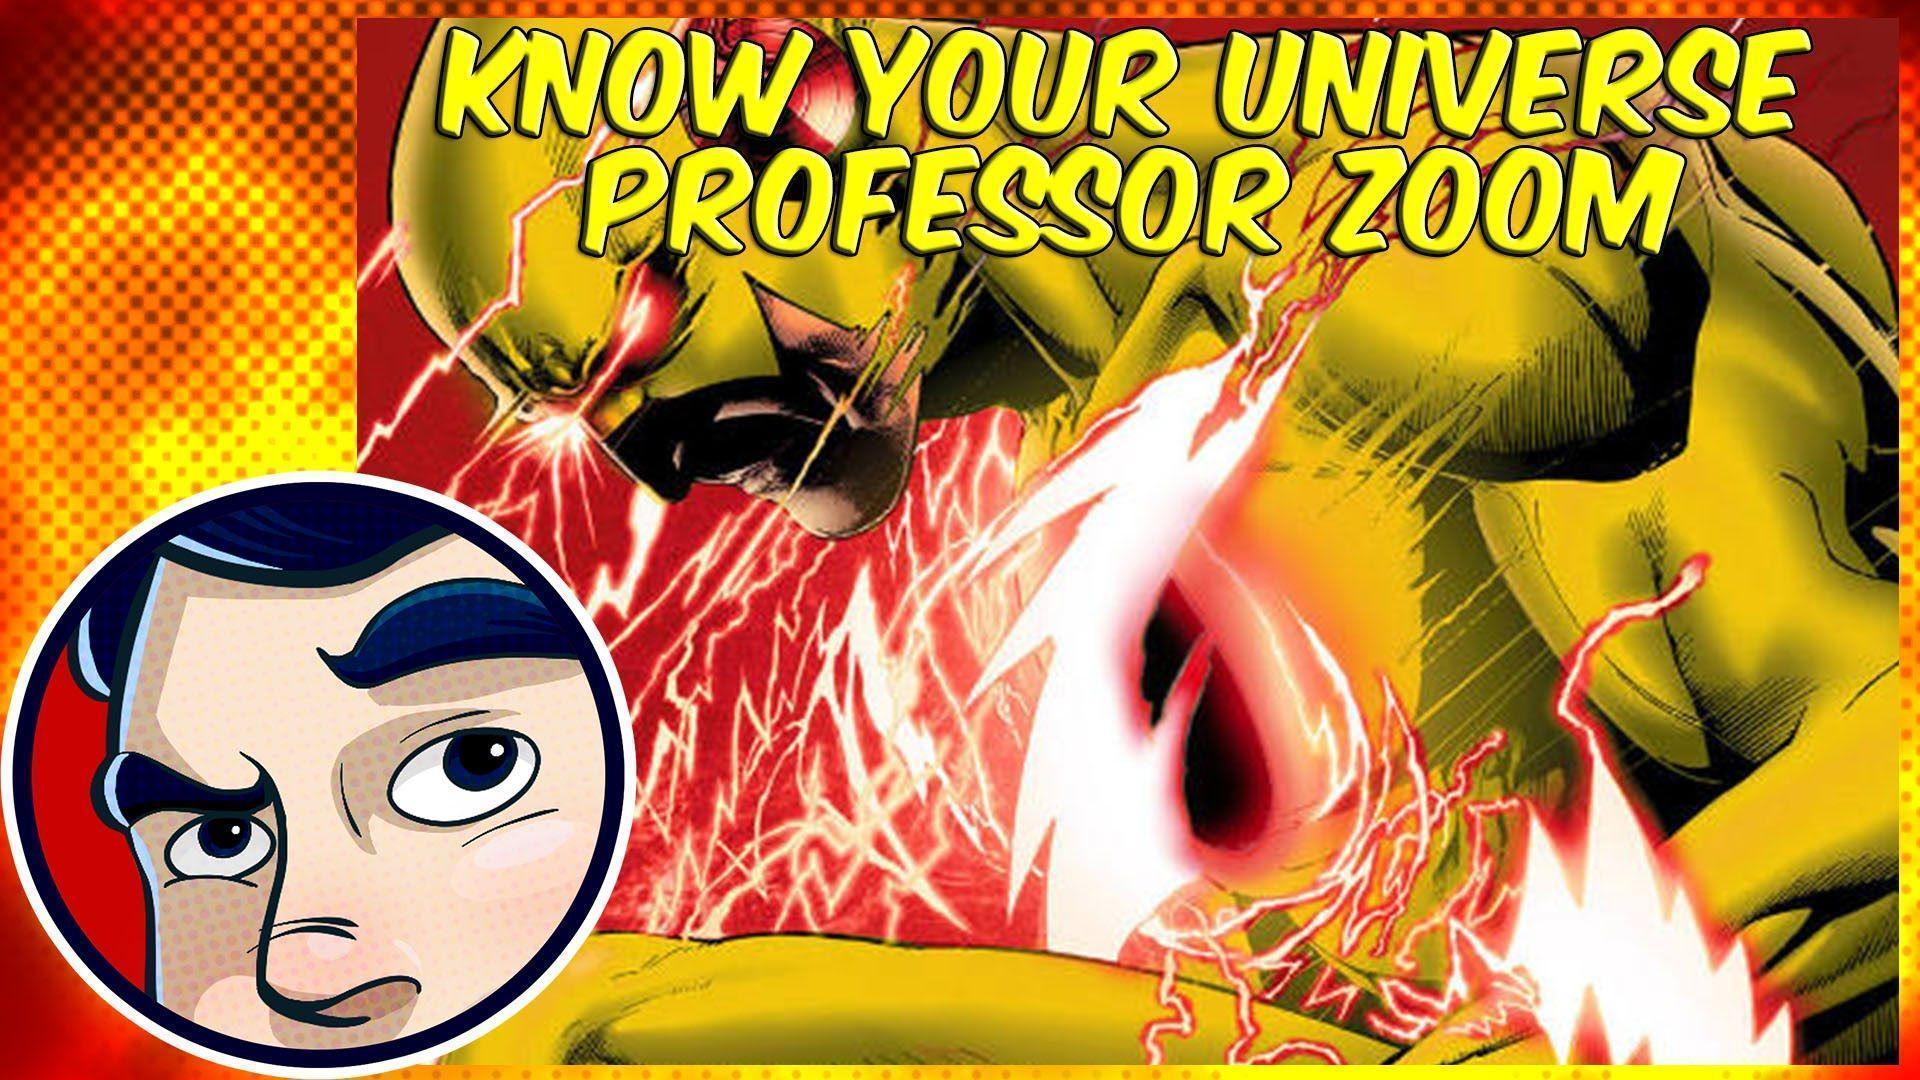 Professor Zoom / Eobard Thawne Your Universe